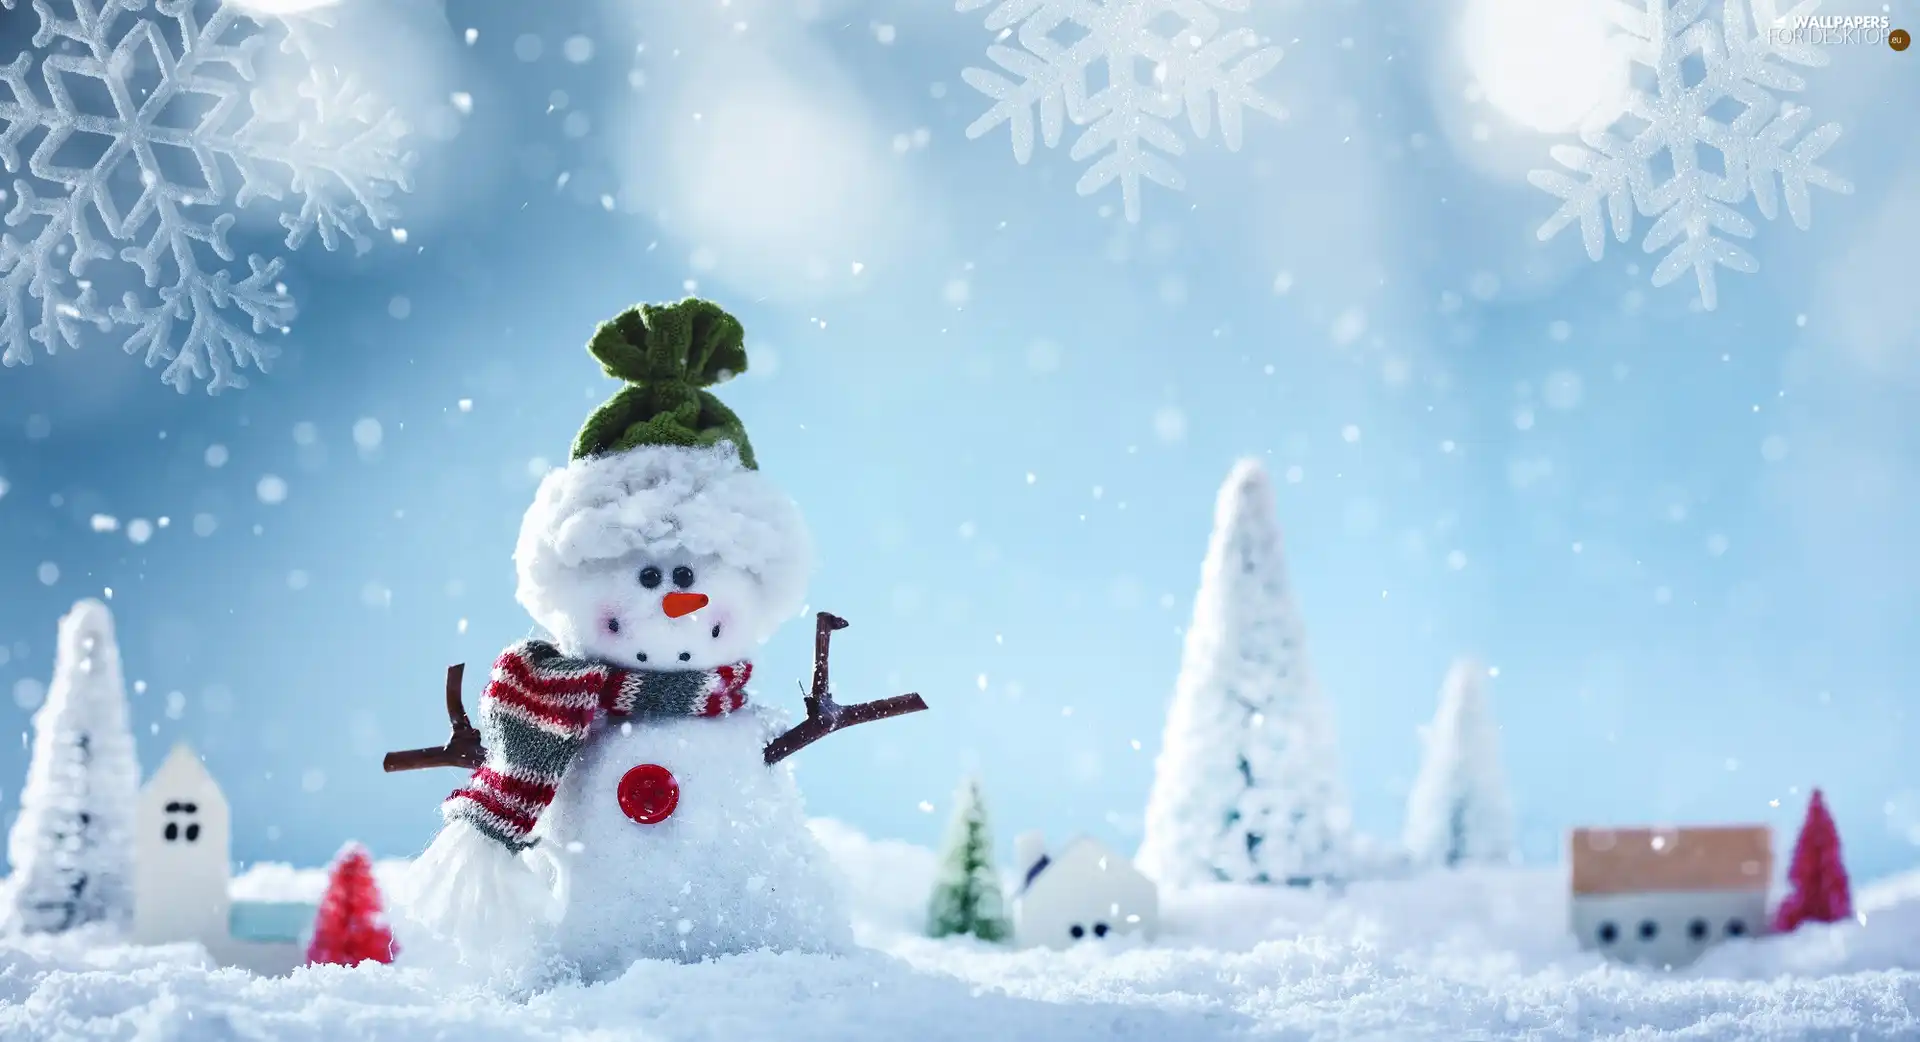 Snowman, decoration, Christmas, Houses, winter, Christmas